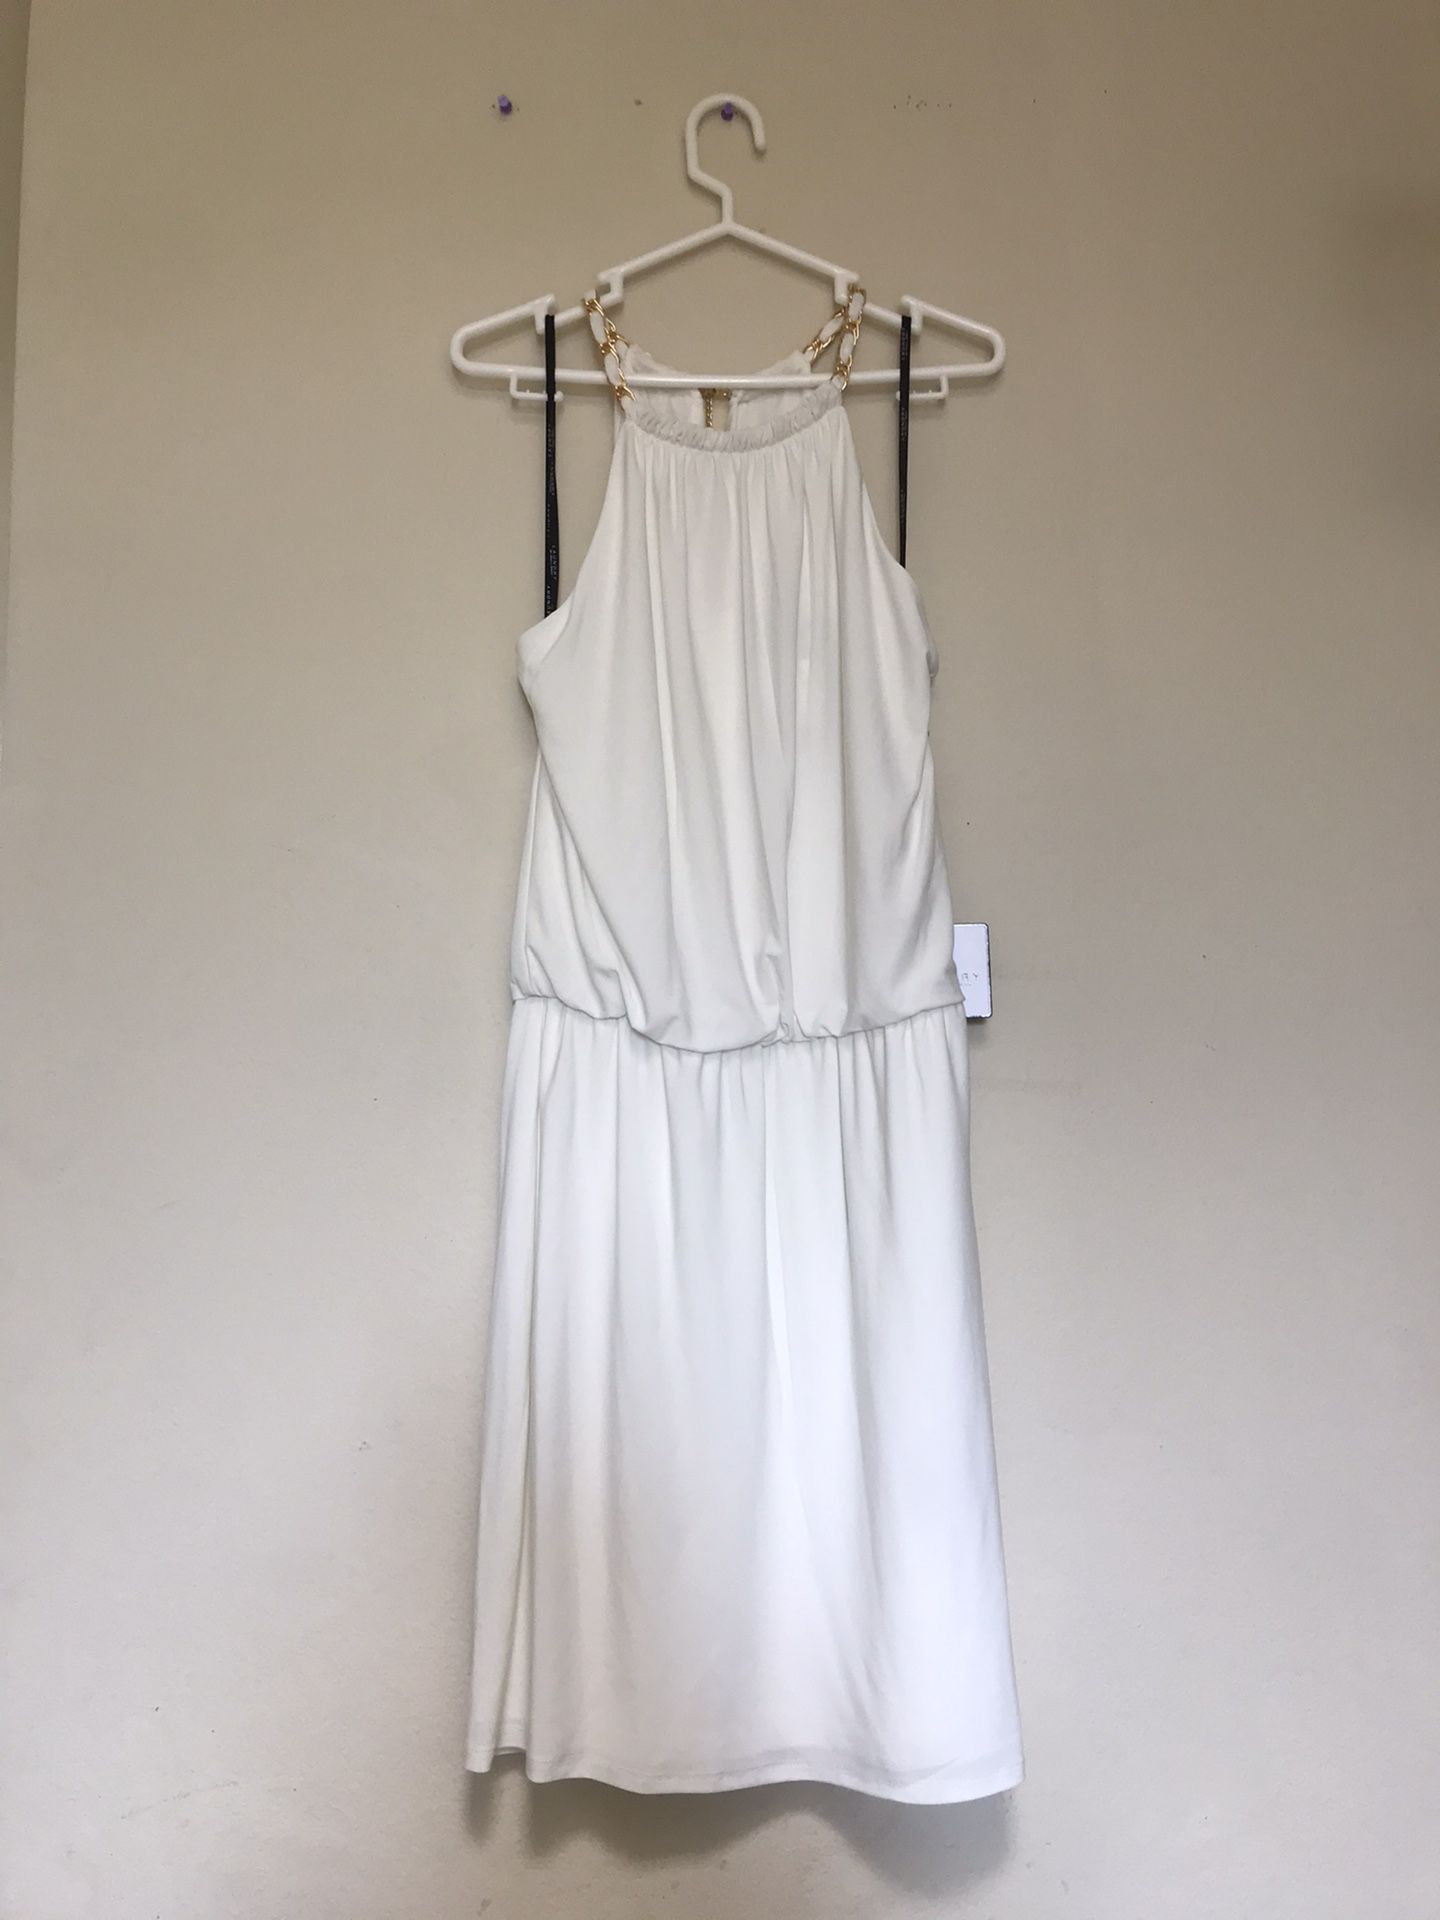 Laundry by Shelli Segal White Dress size 8